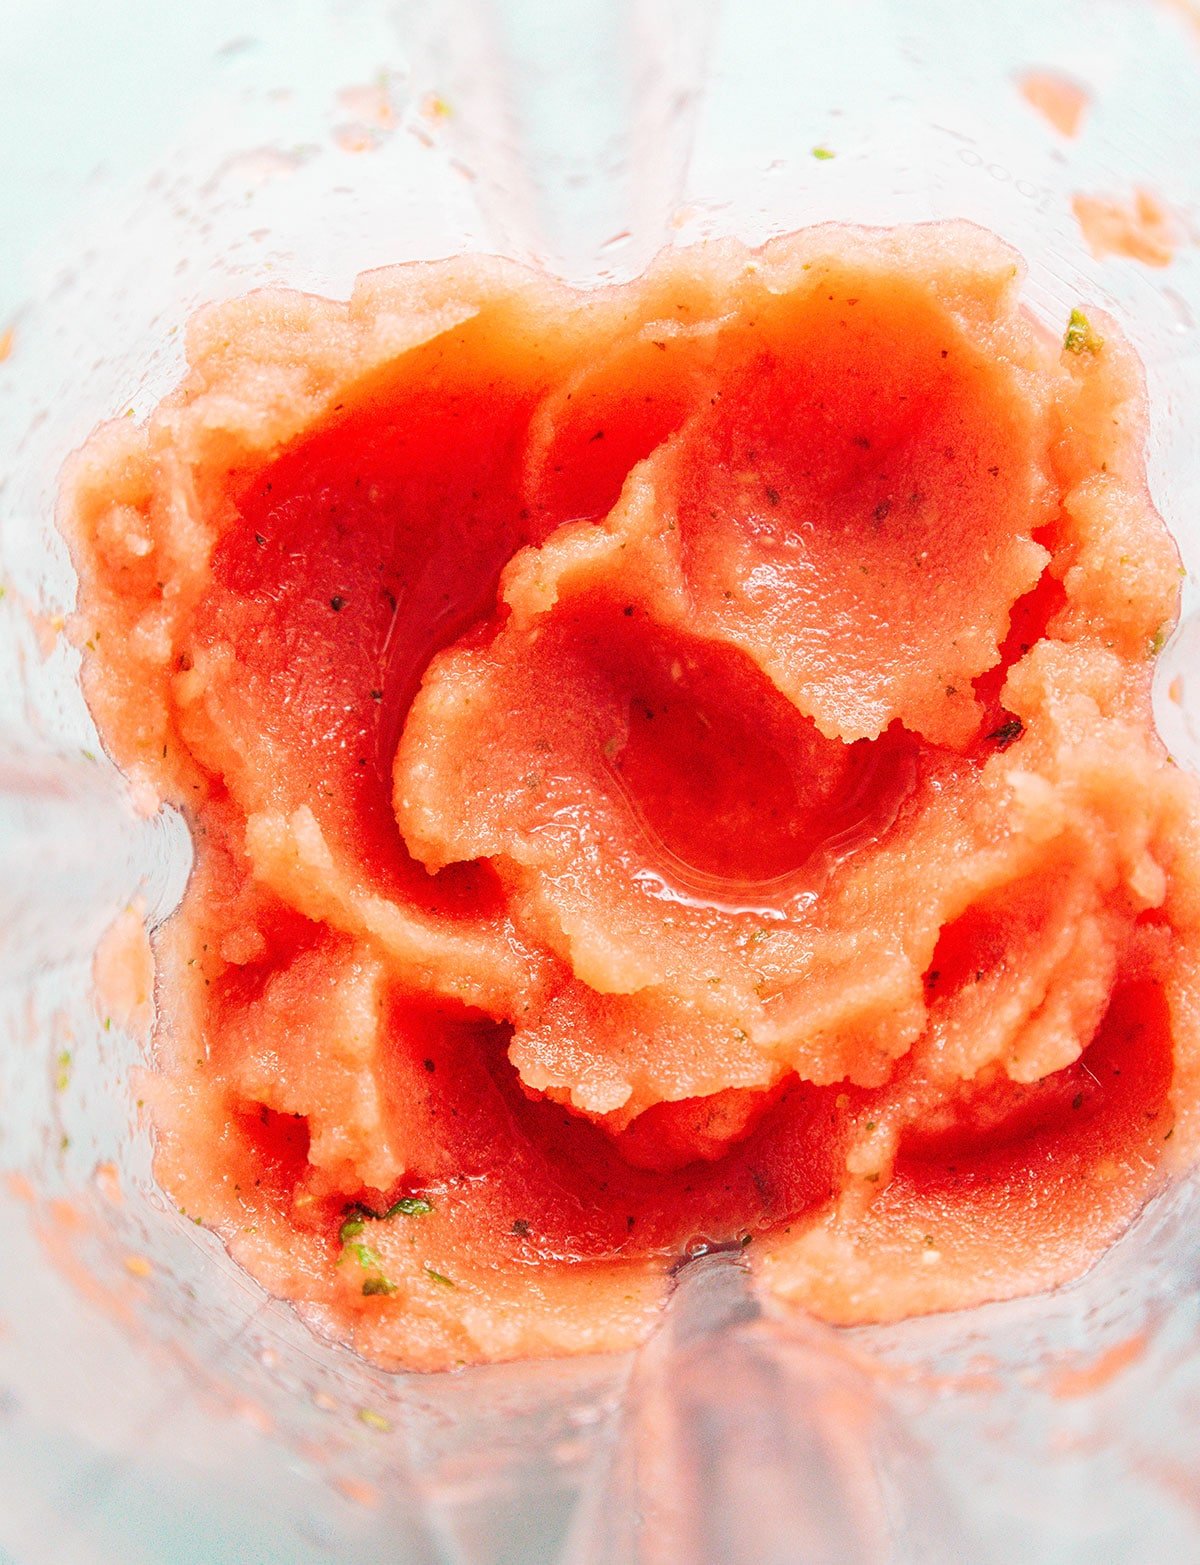 Watermelon smoothie ingredients being blended in a blender.